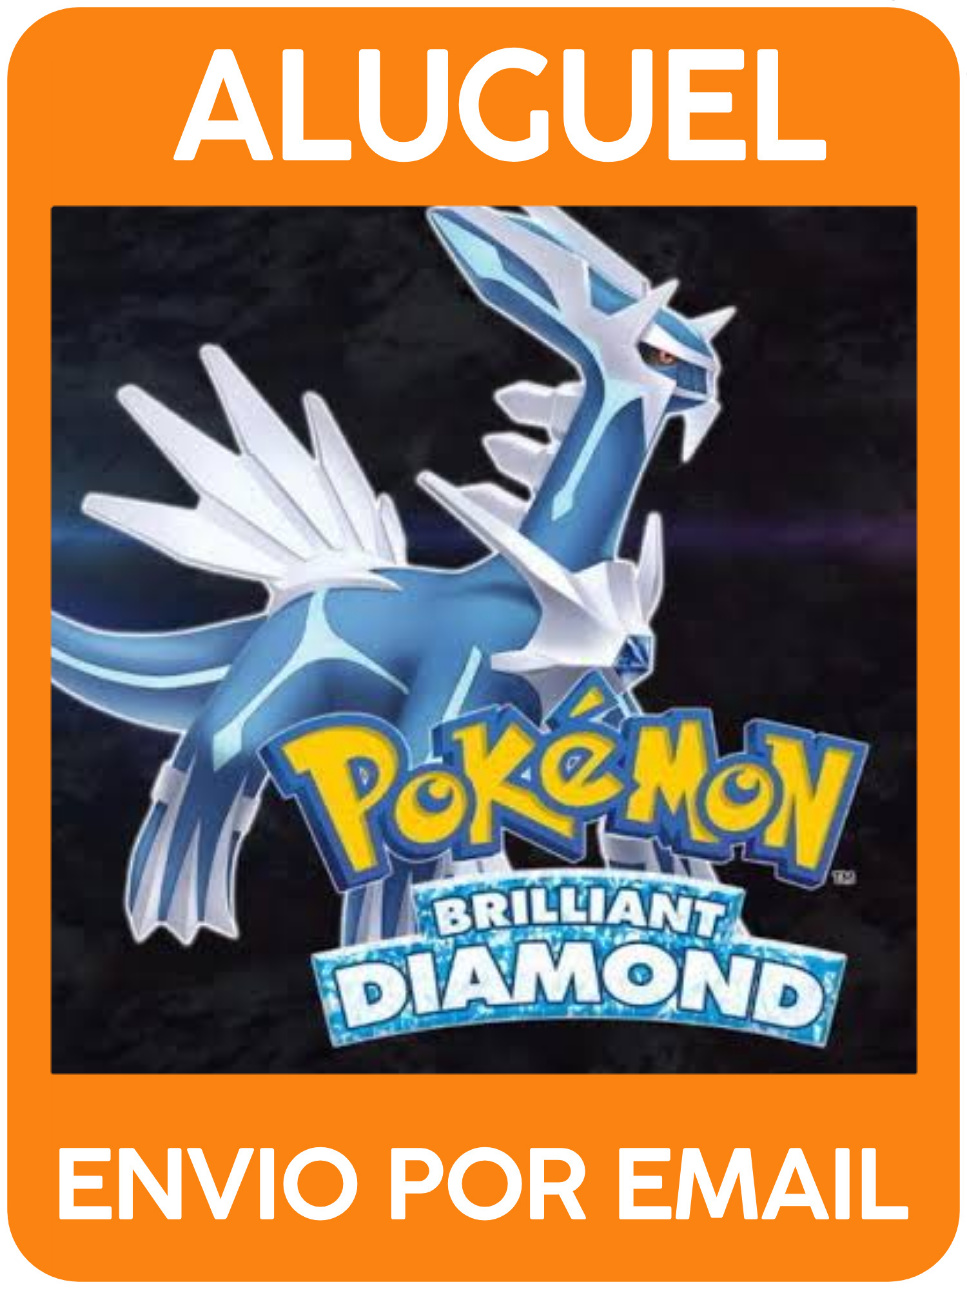 Pokémon Brilliant Diamond, Jogos para a Nintendo Switch